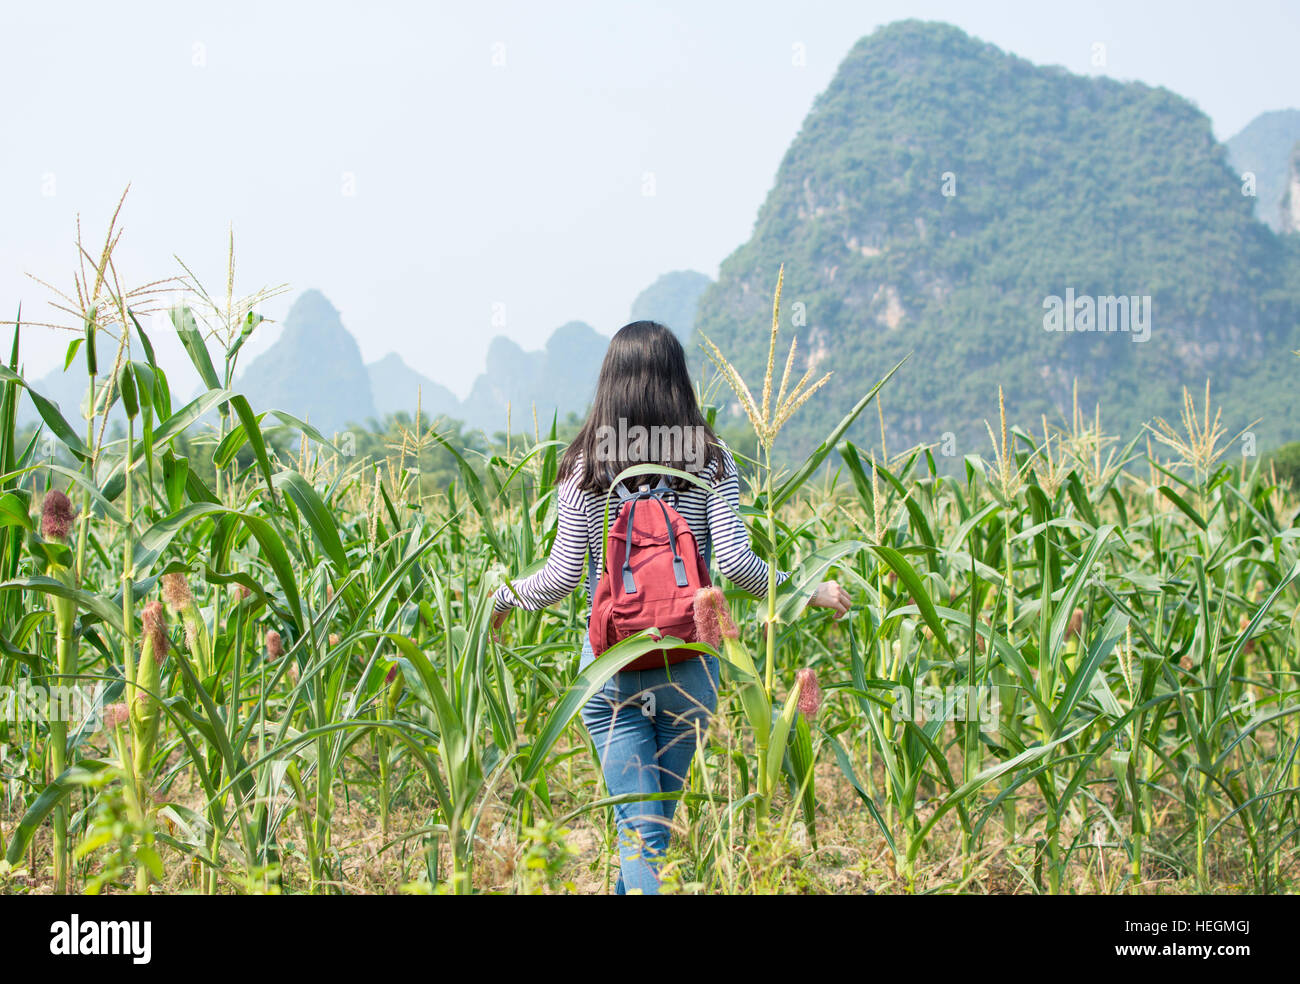 Chica caminando en un campo de maíz con paisajes cársticos Foto de stock